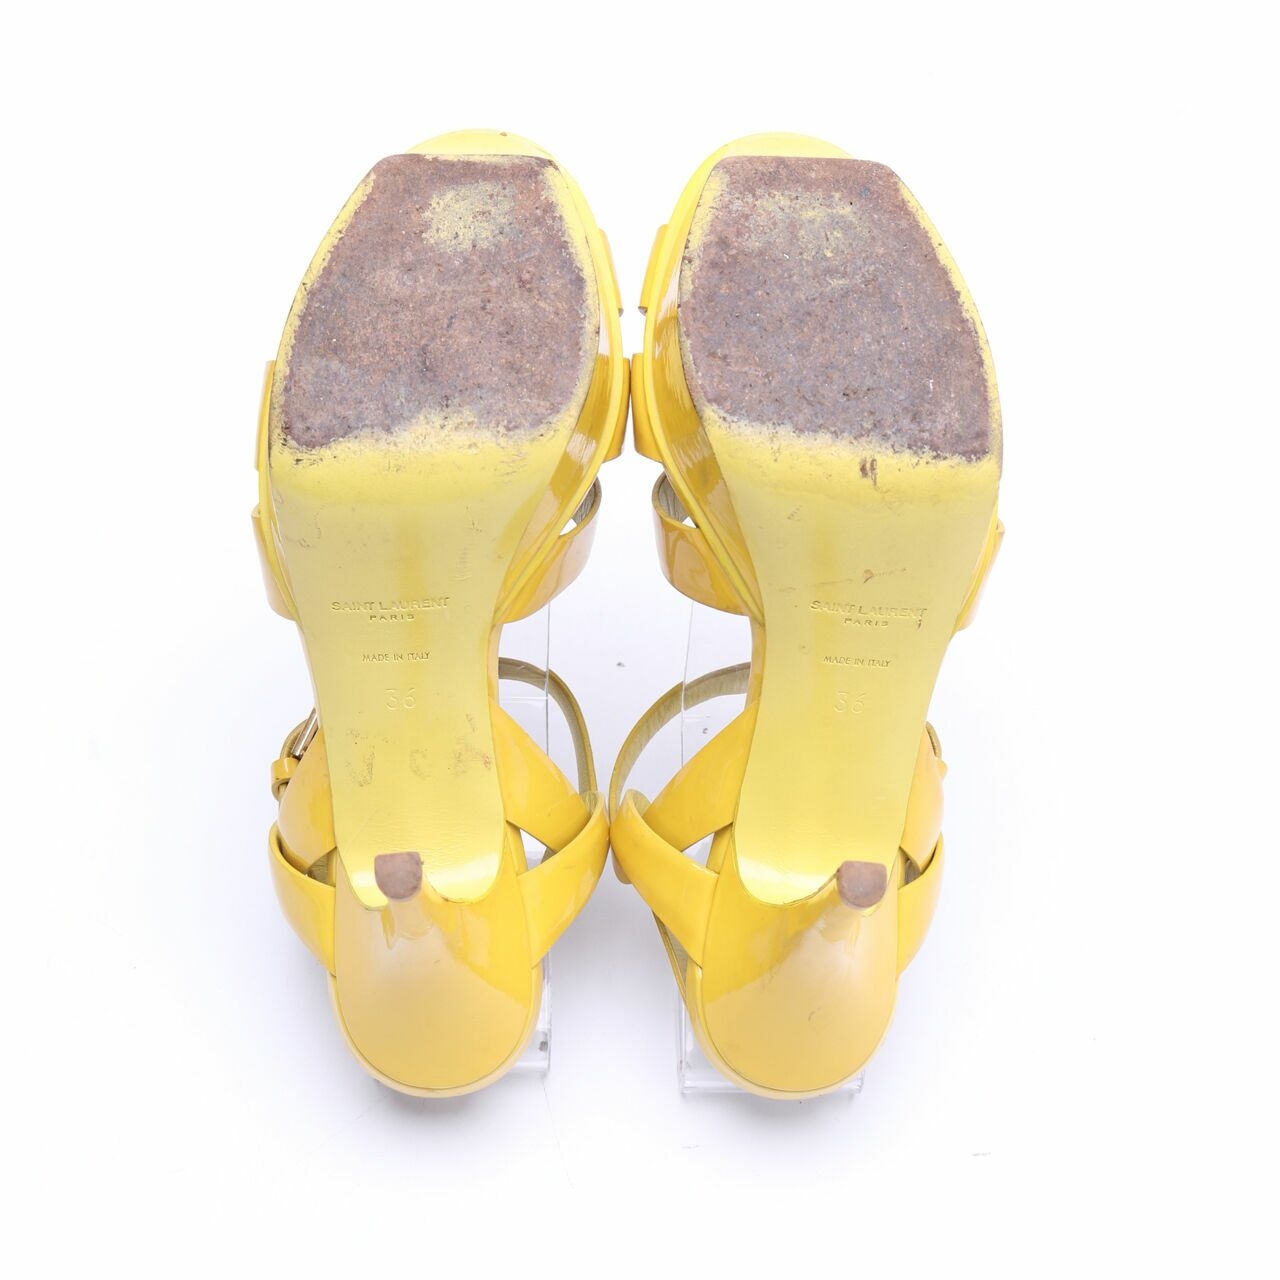 Yves Saint Laurent Tribute Yellow Patent Leather Heels